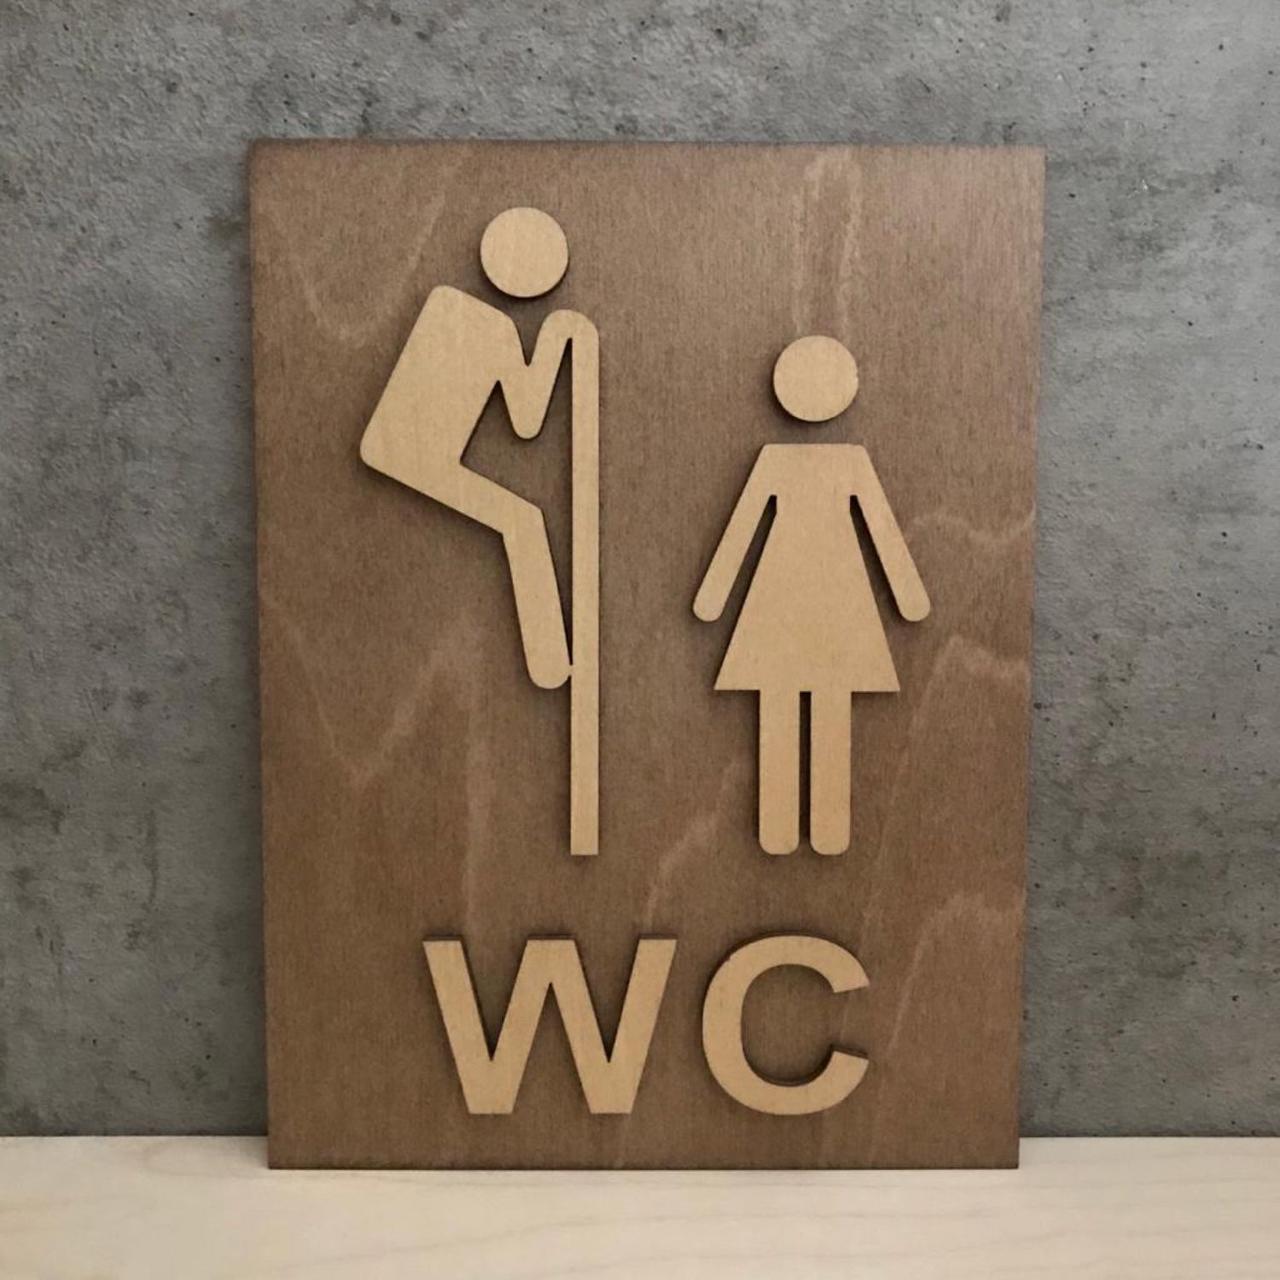 Табличка для туалета WC